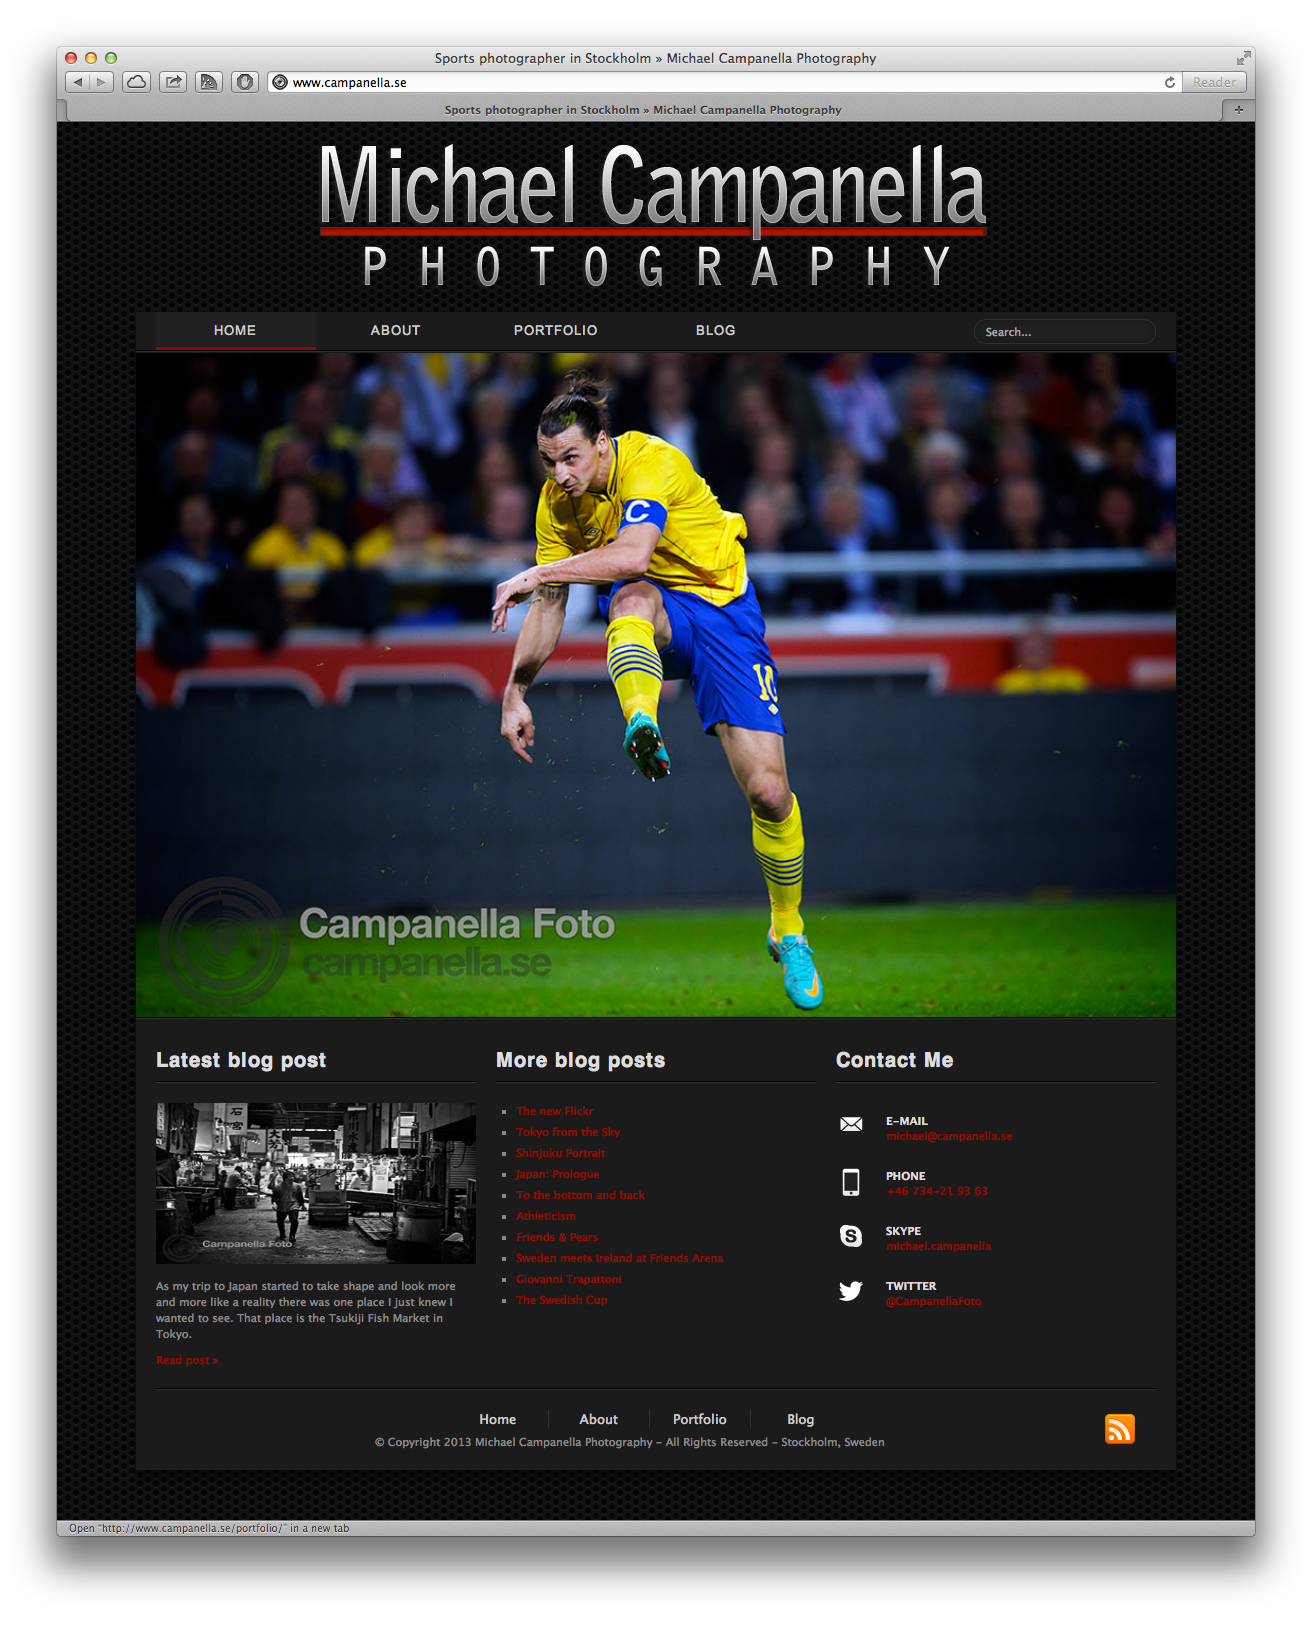 CampanellaFoto - Version 4.0 - Homepage